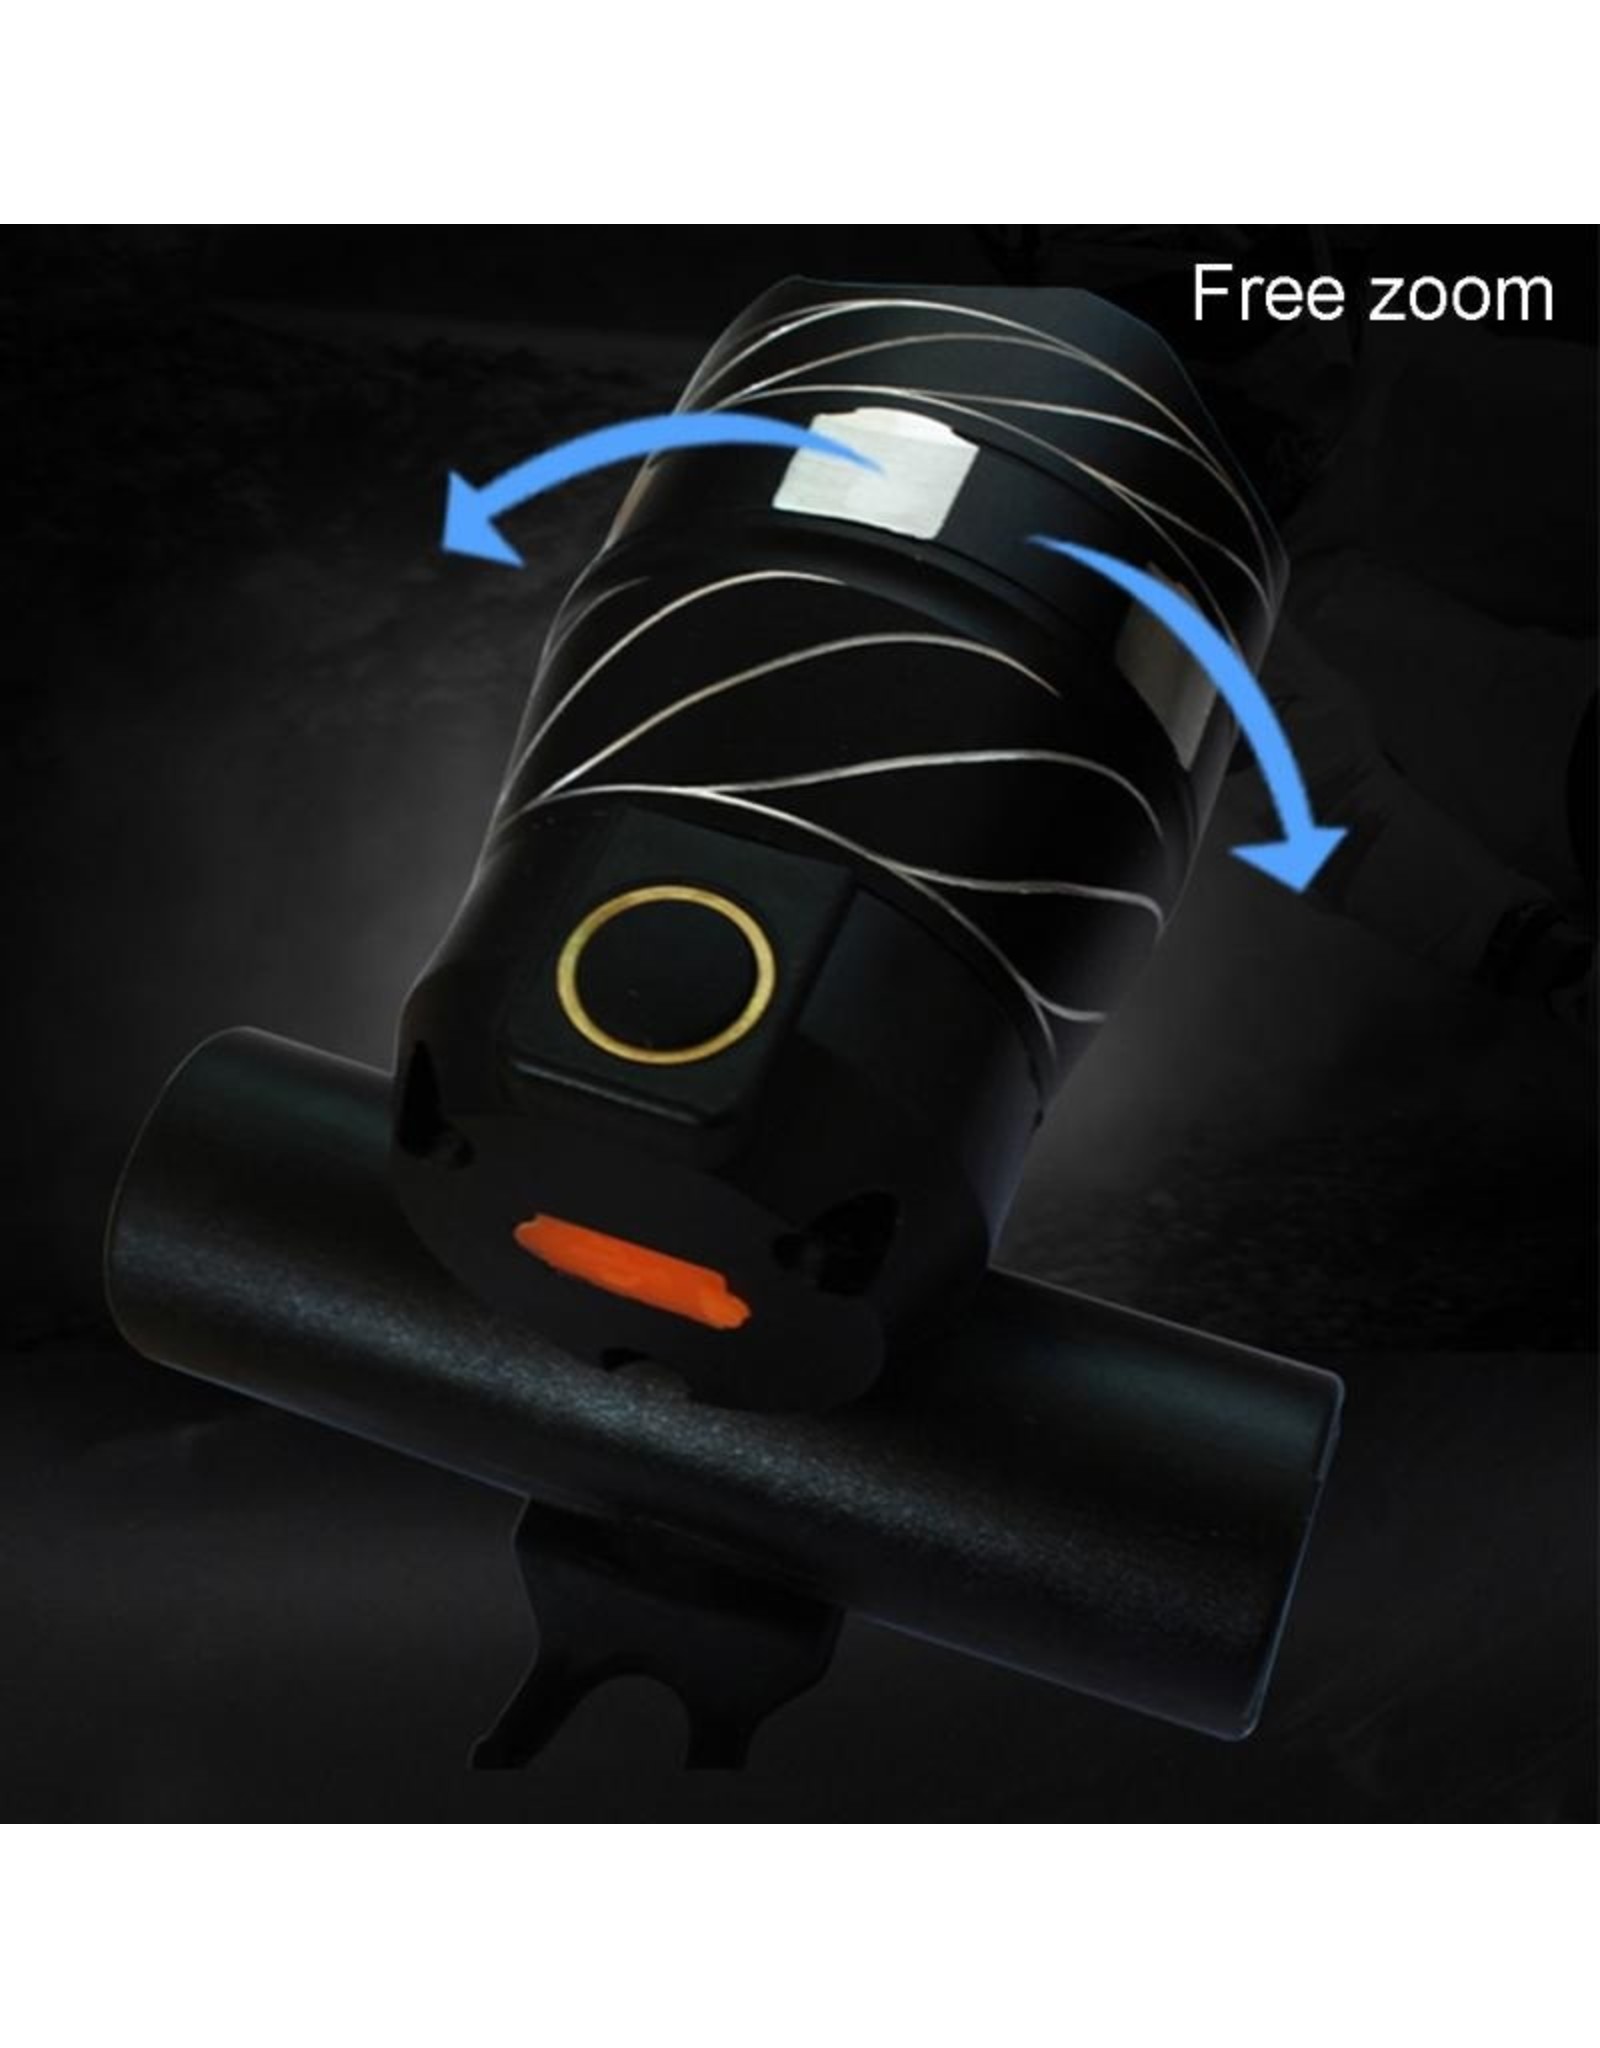 Merkloos Ultieme Led Fietslamp - Oplaadbaar via USB - Super fel - 3 standen & zoom